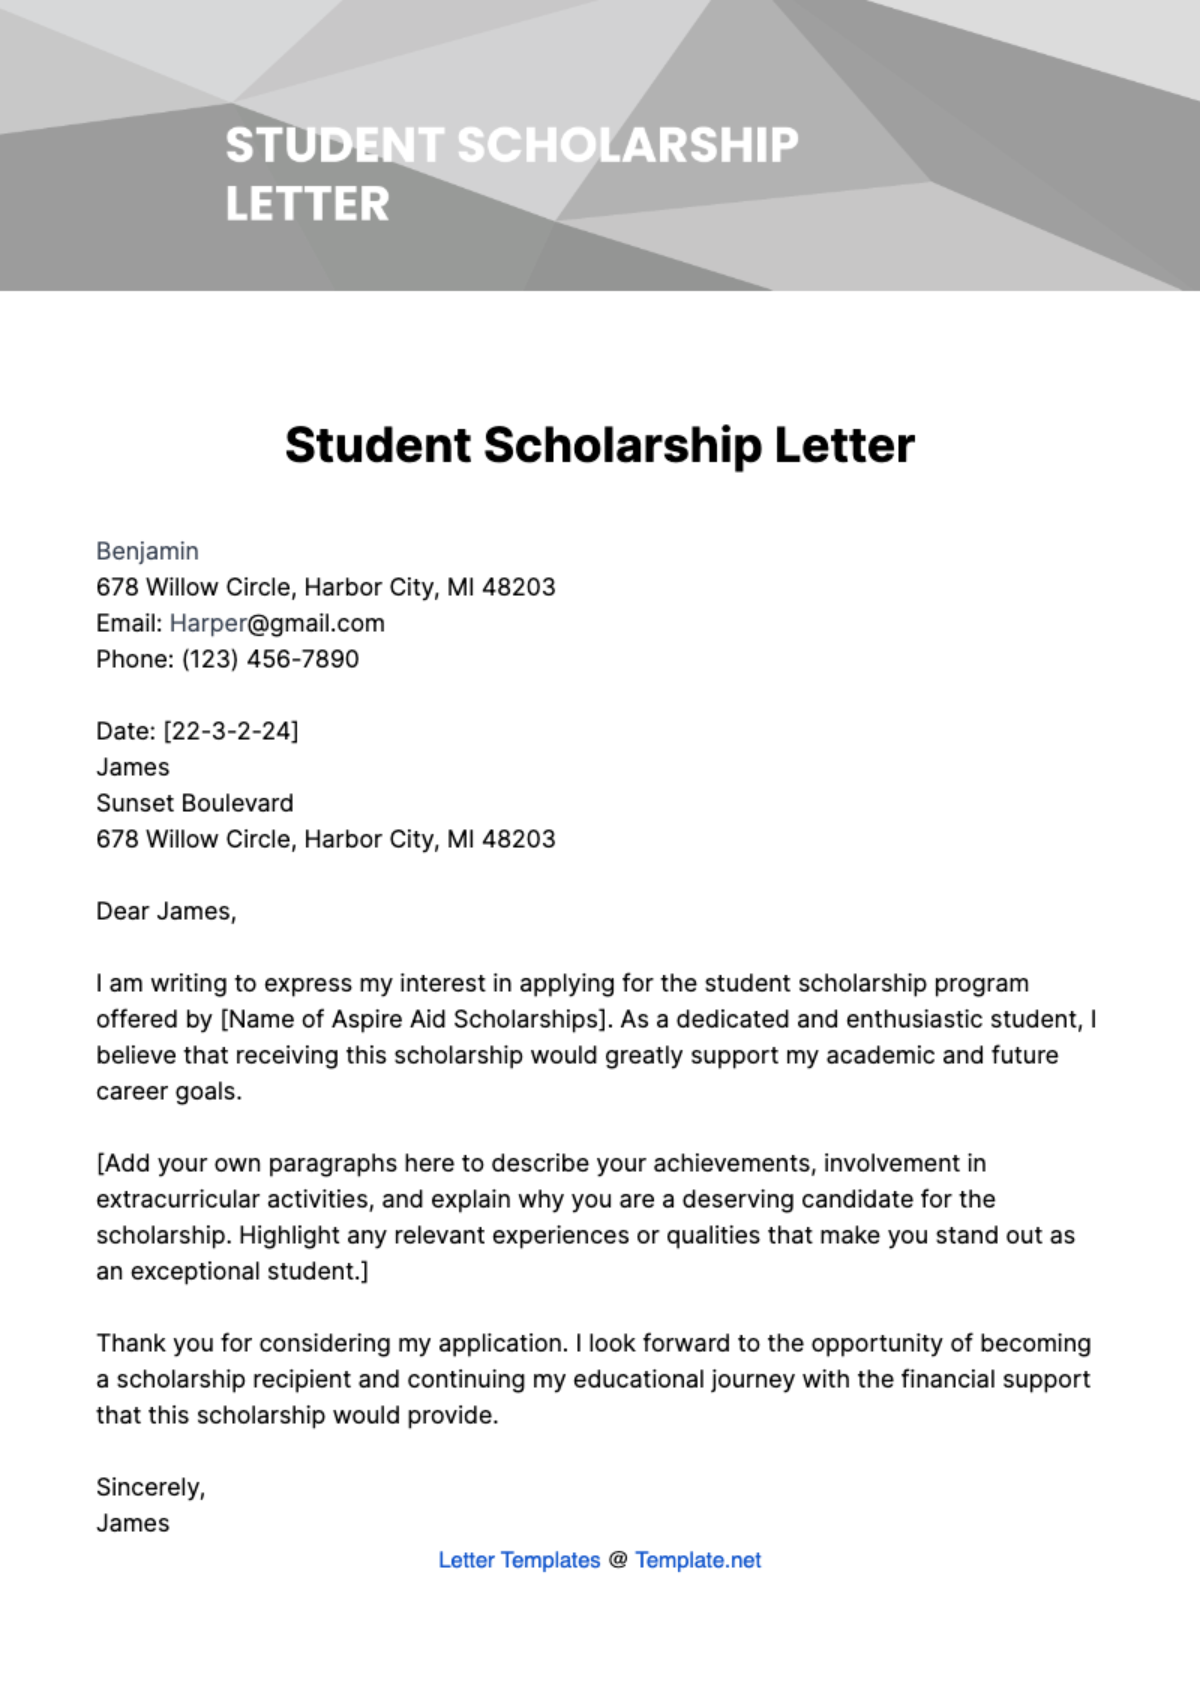 Student Scholarship Letter Template